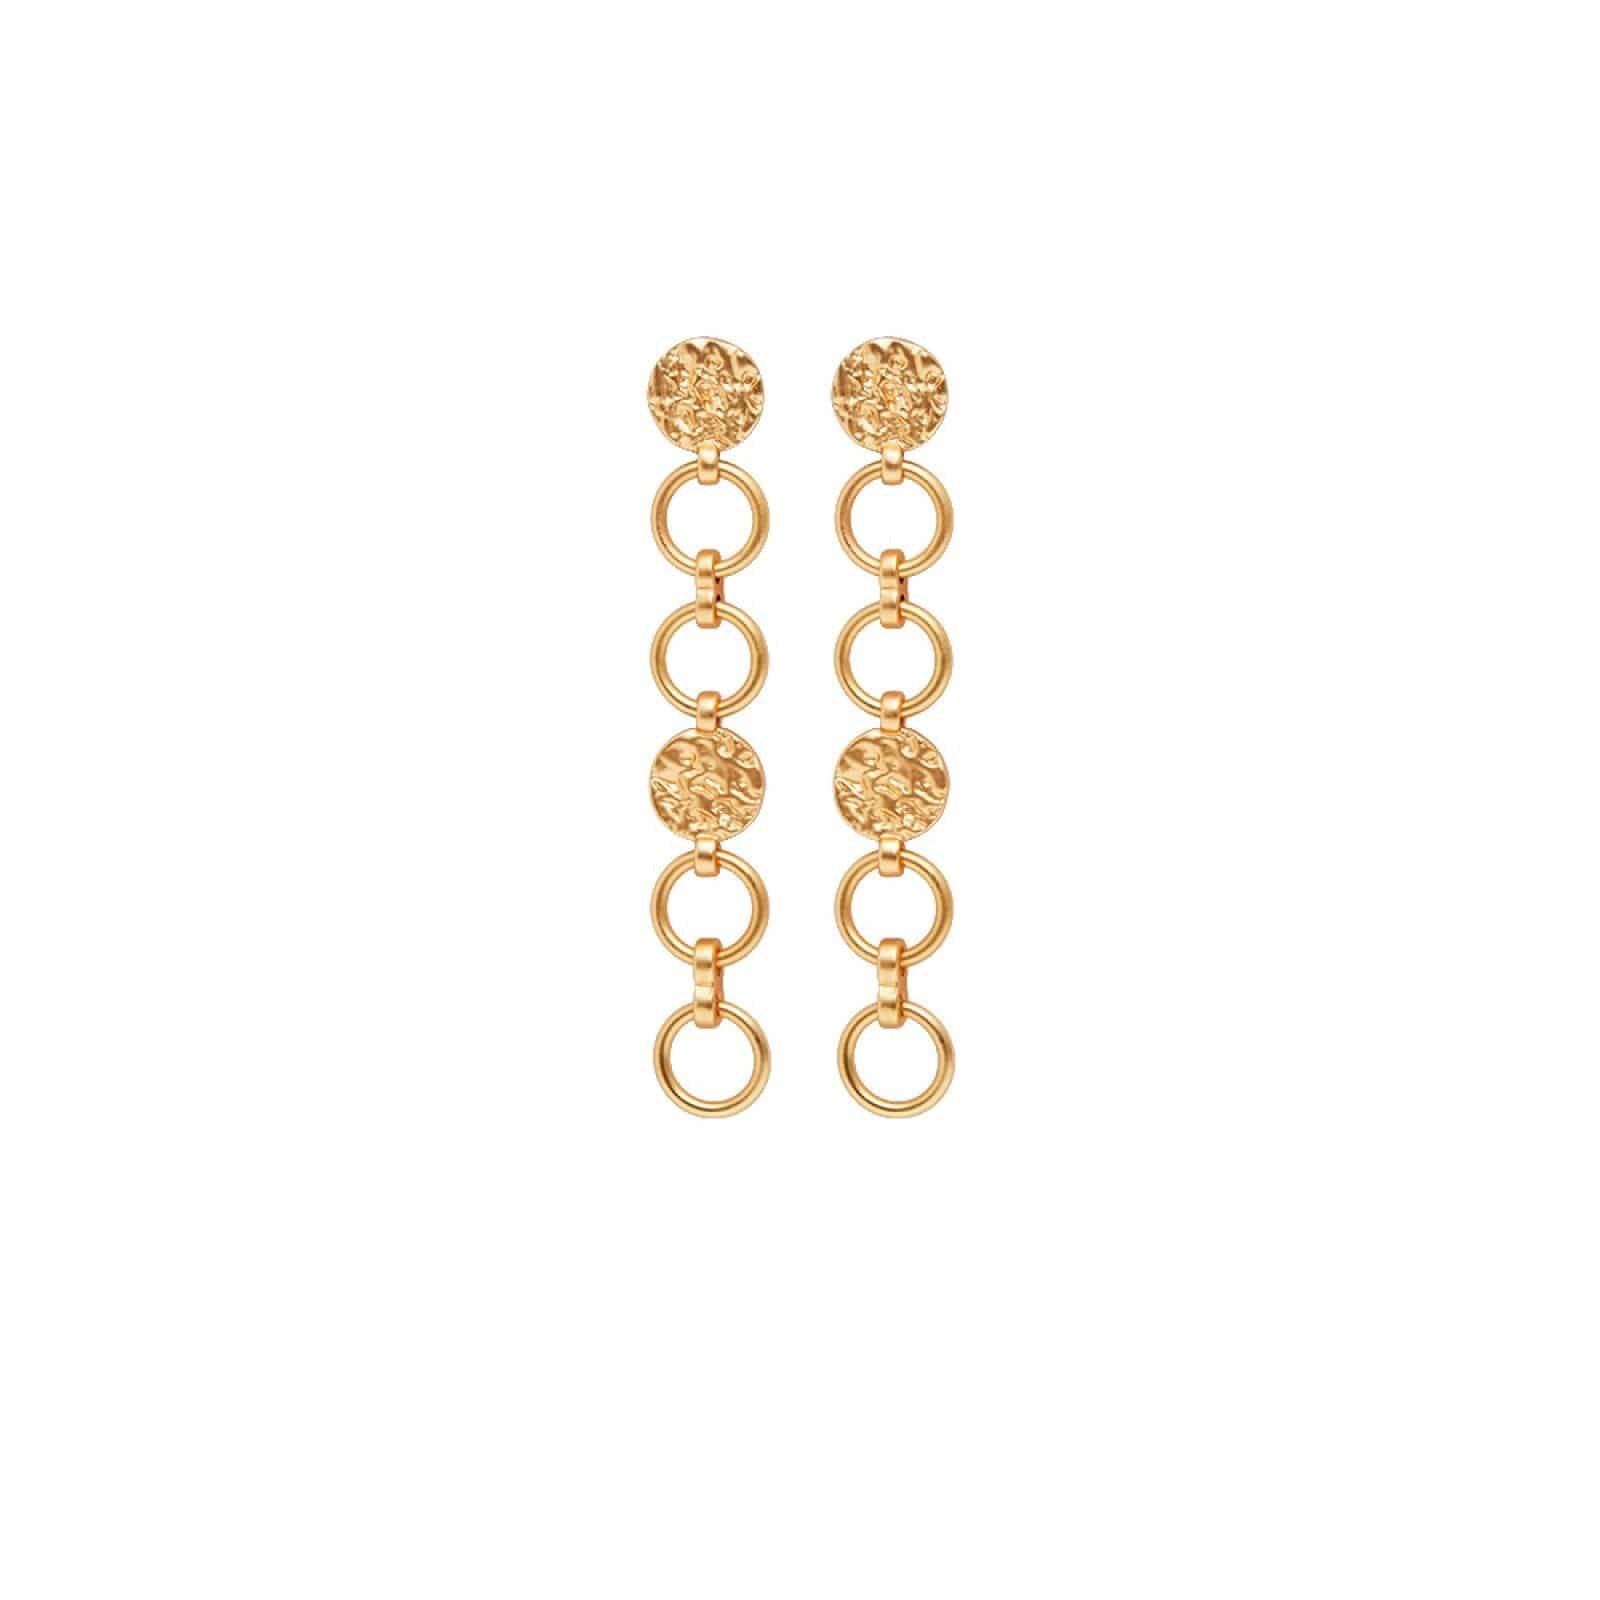 Amber Long Earrings, Gold Plated